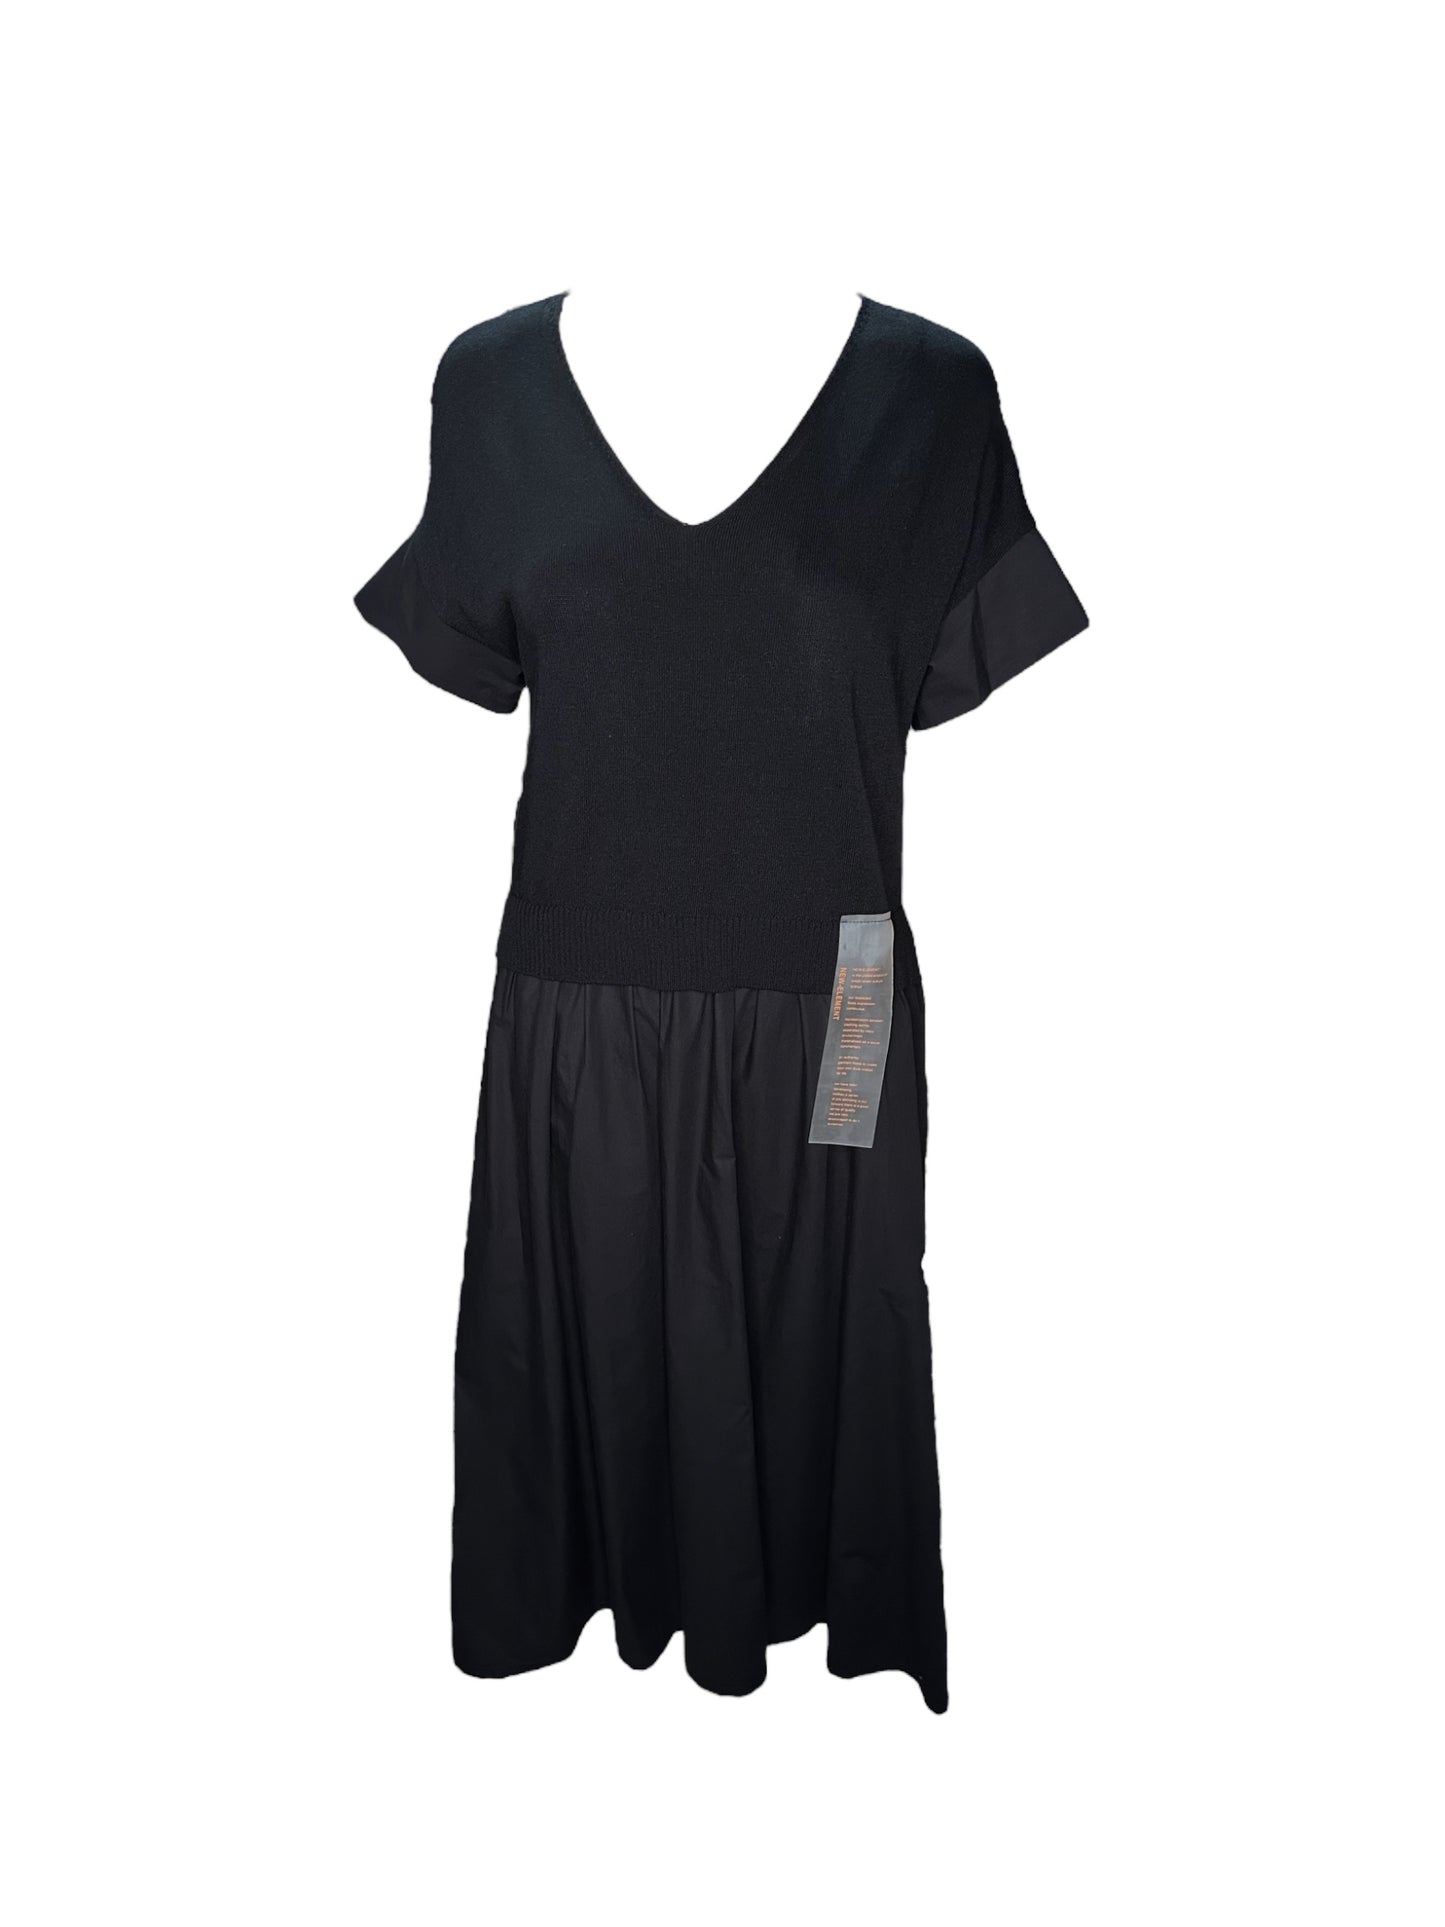 V-Neck Short Sleeve Knitwear Top Dress